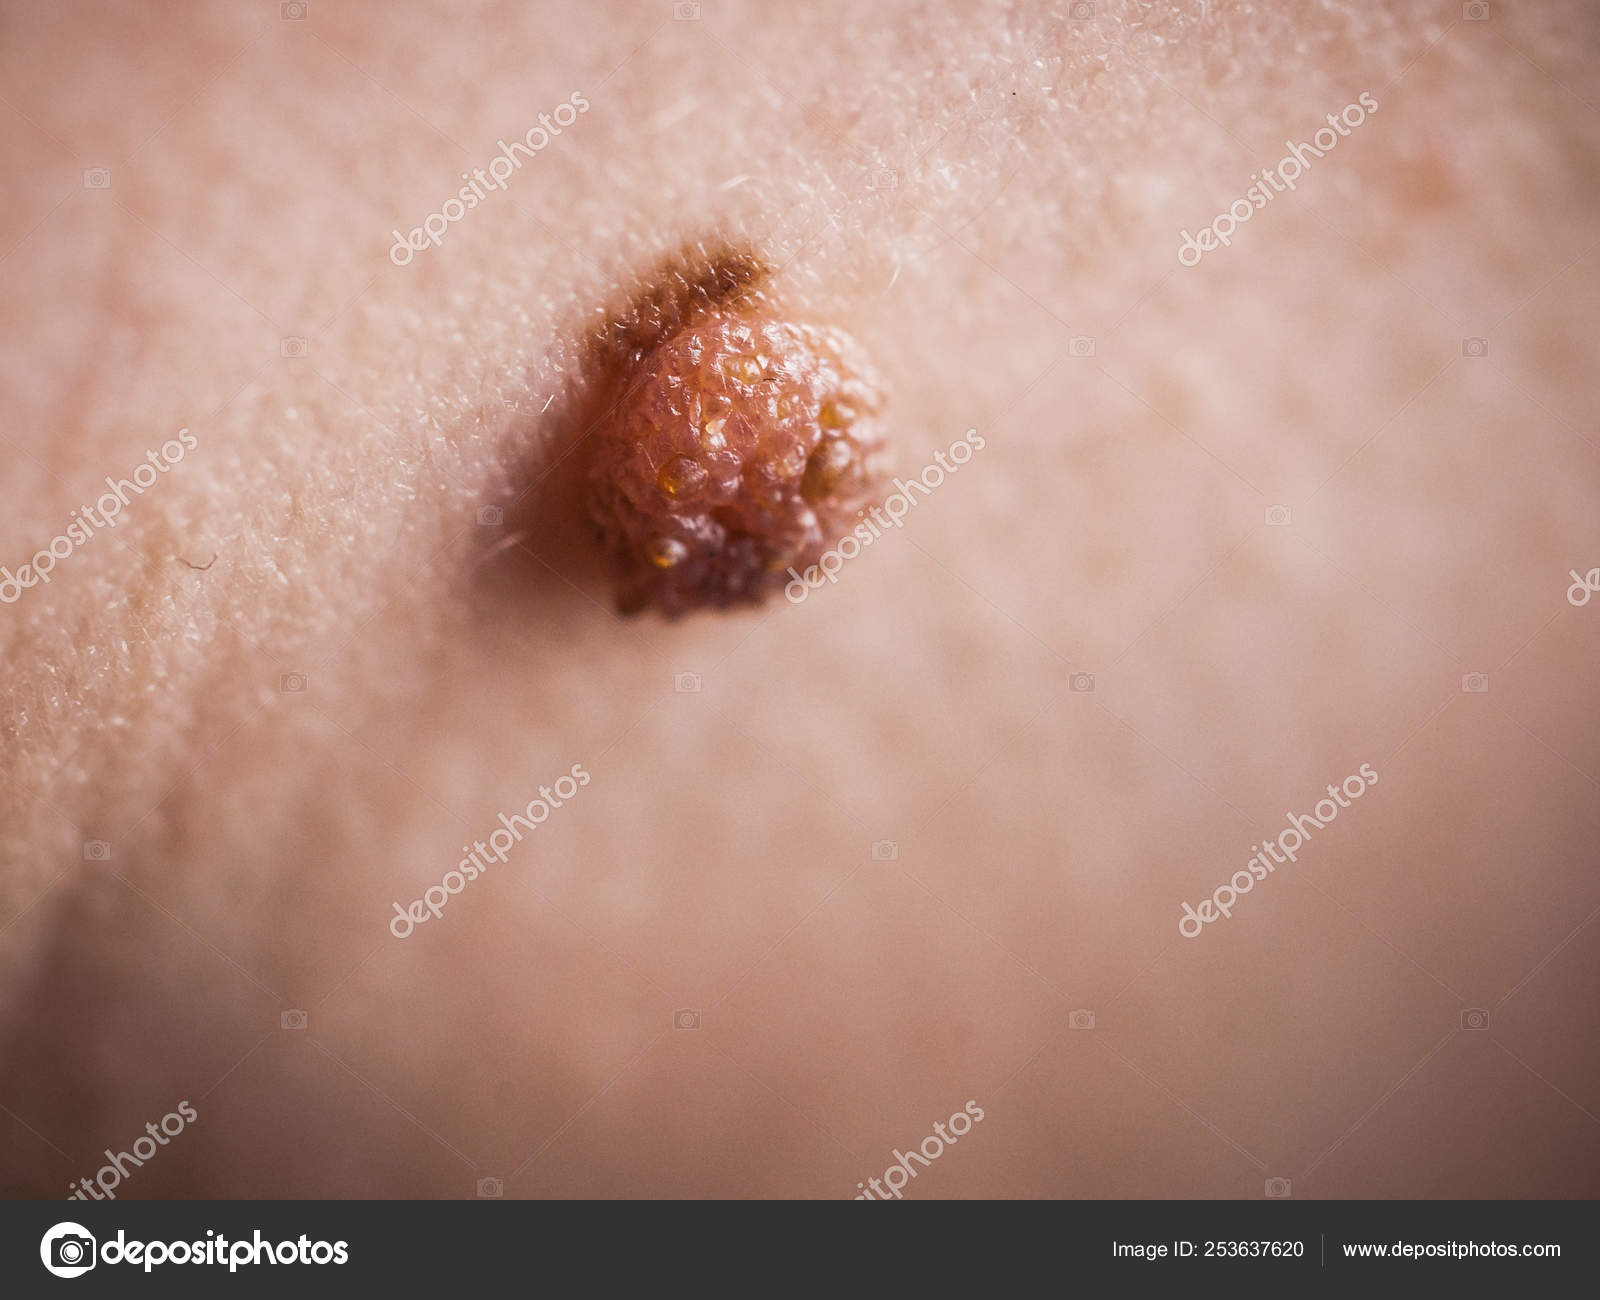 papilloma skin